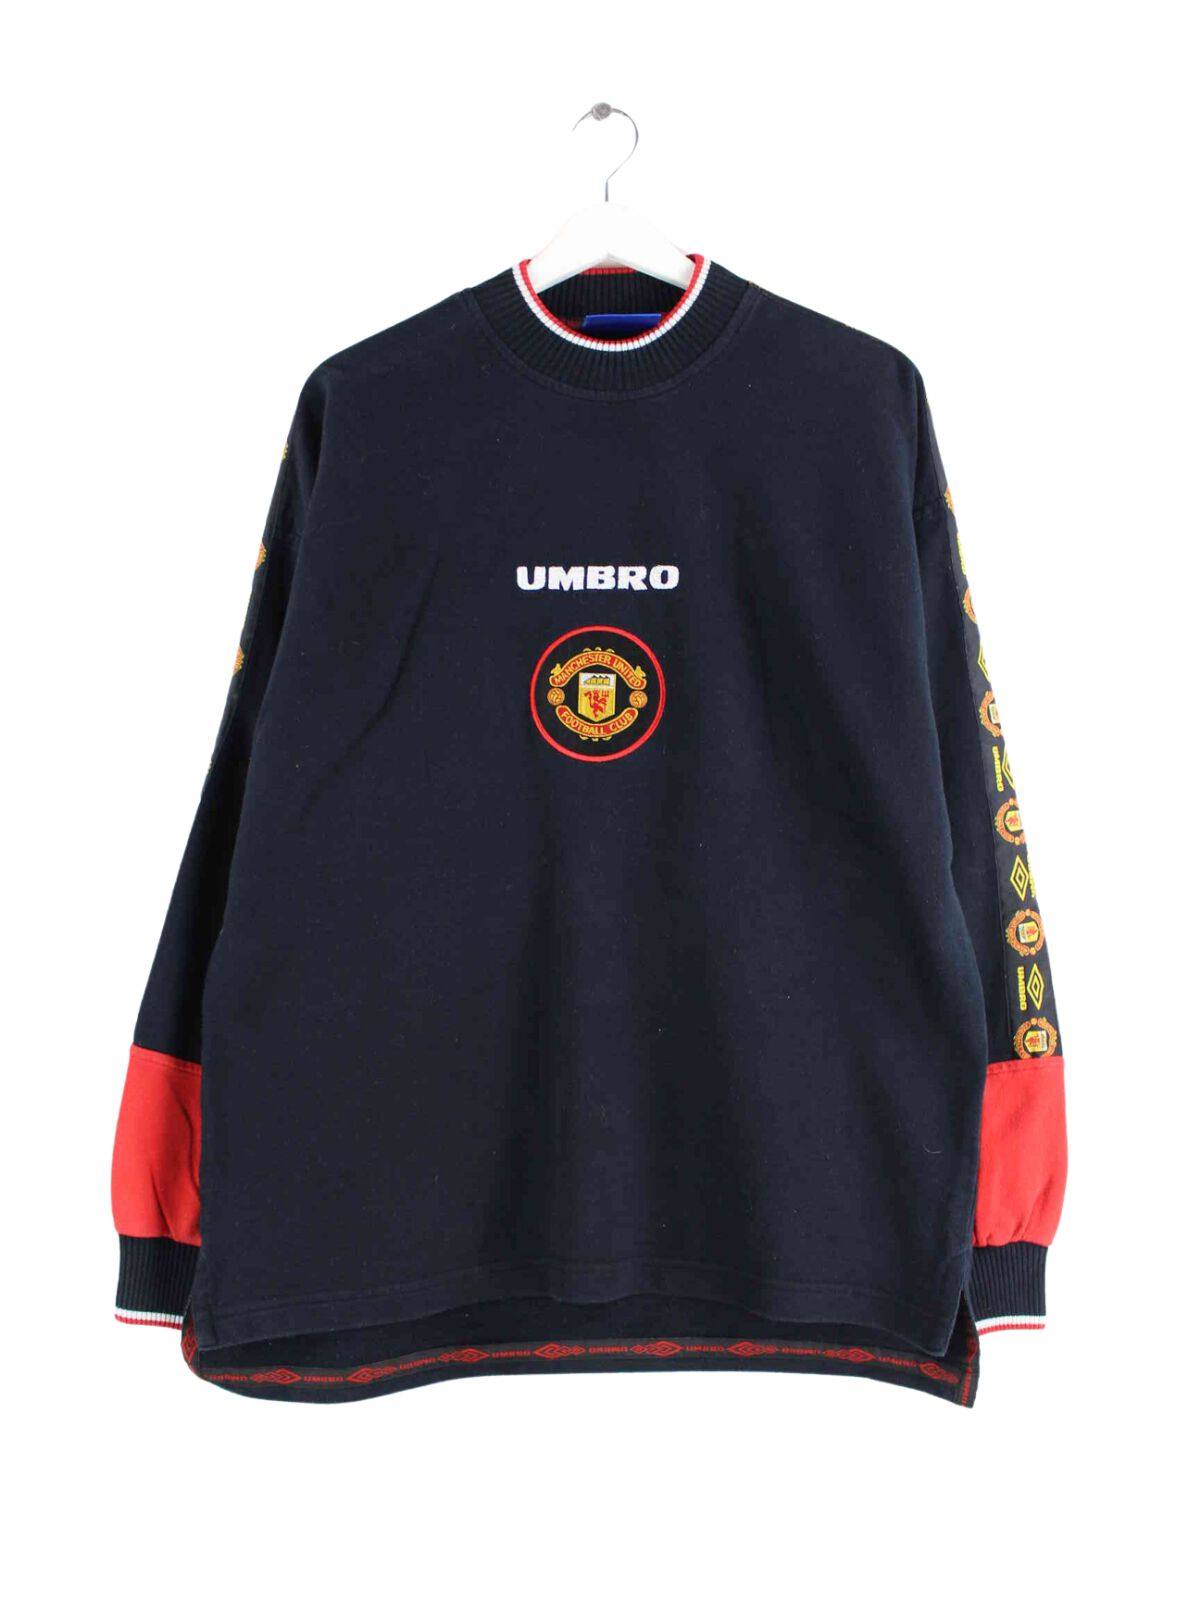 Umbro 90s Vintage Manchester Tape Sweater Schwarz L (front image)